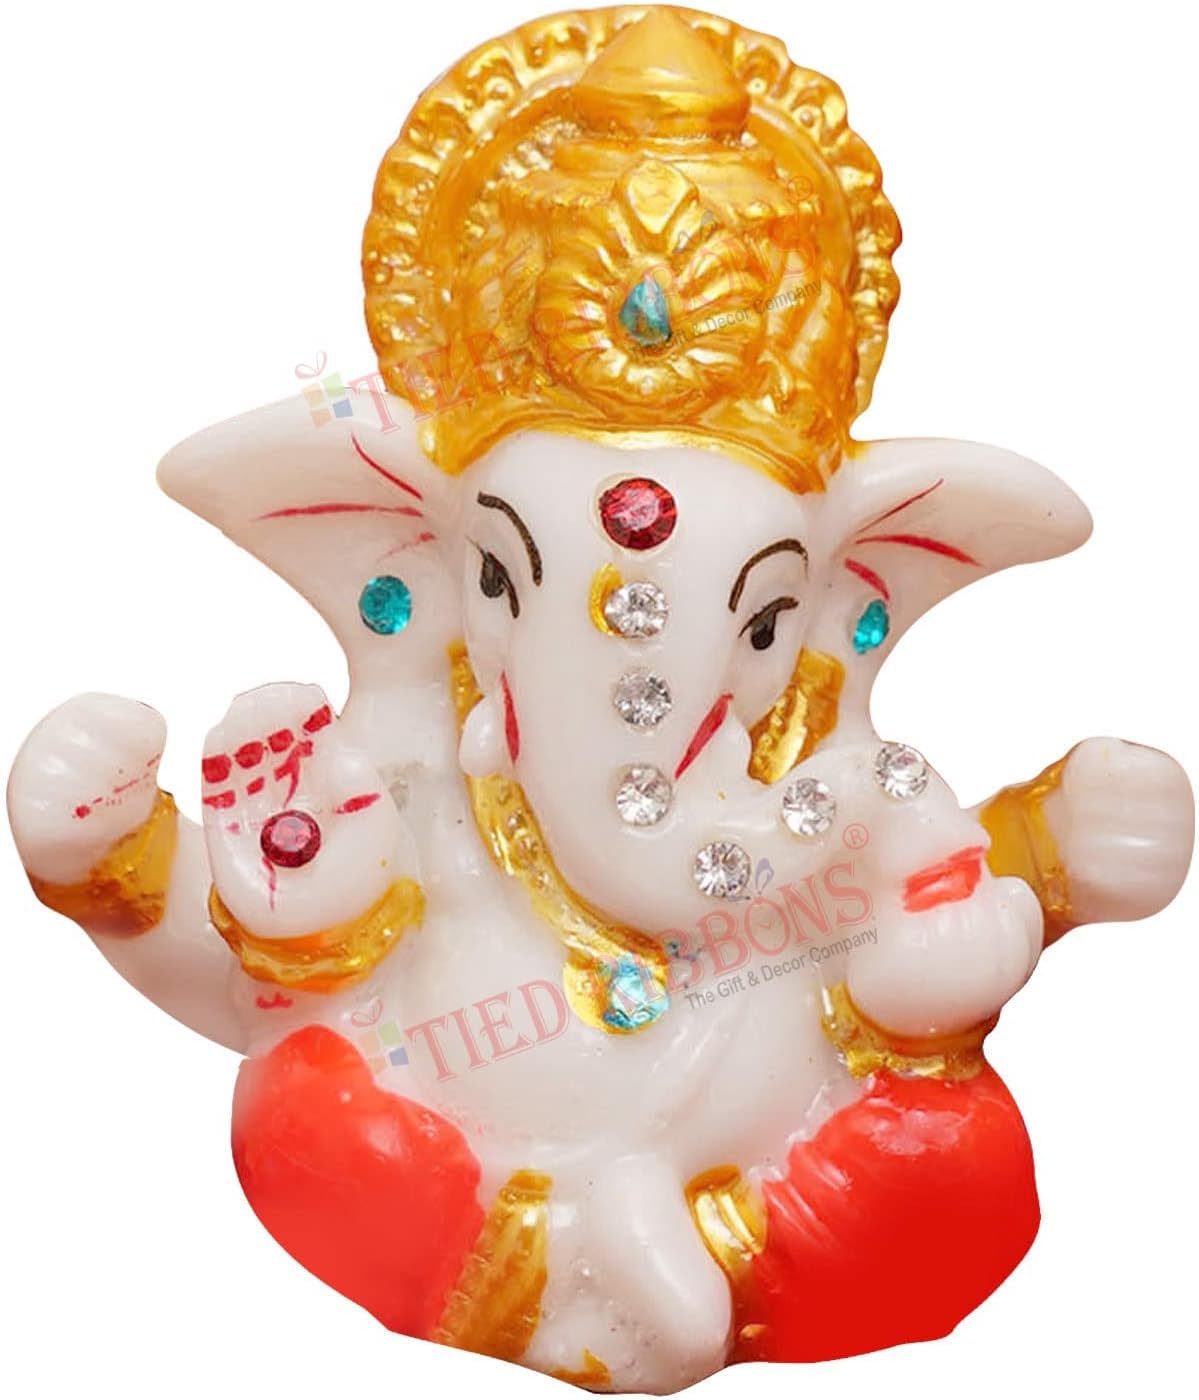 TIED RIBBONS Ganesh Idol | Ganesh Statue Sculpture for Car Dashboard, Home, Temple Décor | Indian God | 2 X 2.3 Inch | Resin | Ganesha Idol Figurine - Diwali Decorations for Home